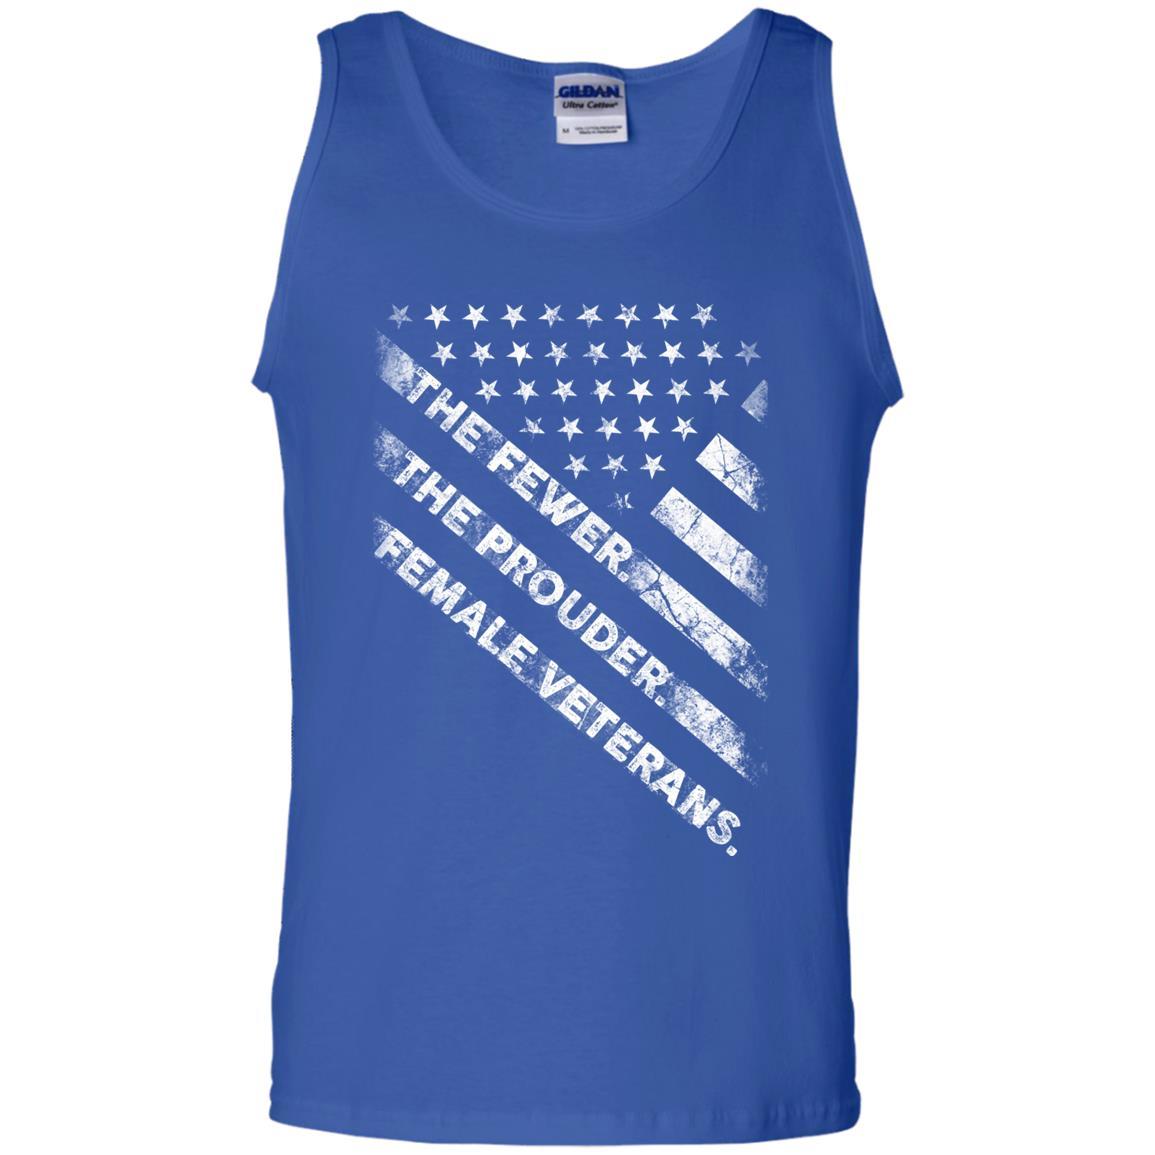 Military T-Shirt "Female Veterans The Fewer The Prouder Women On" Front-TShirt-General-Veterans Nation